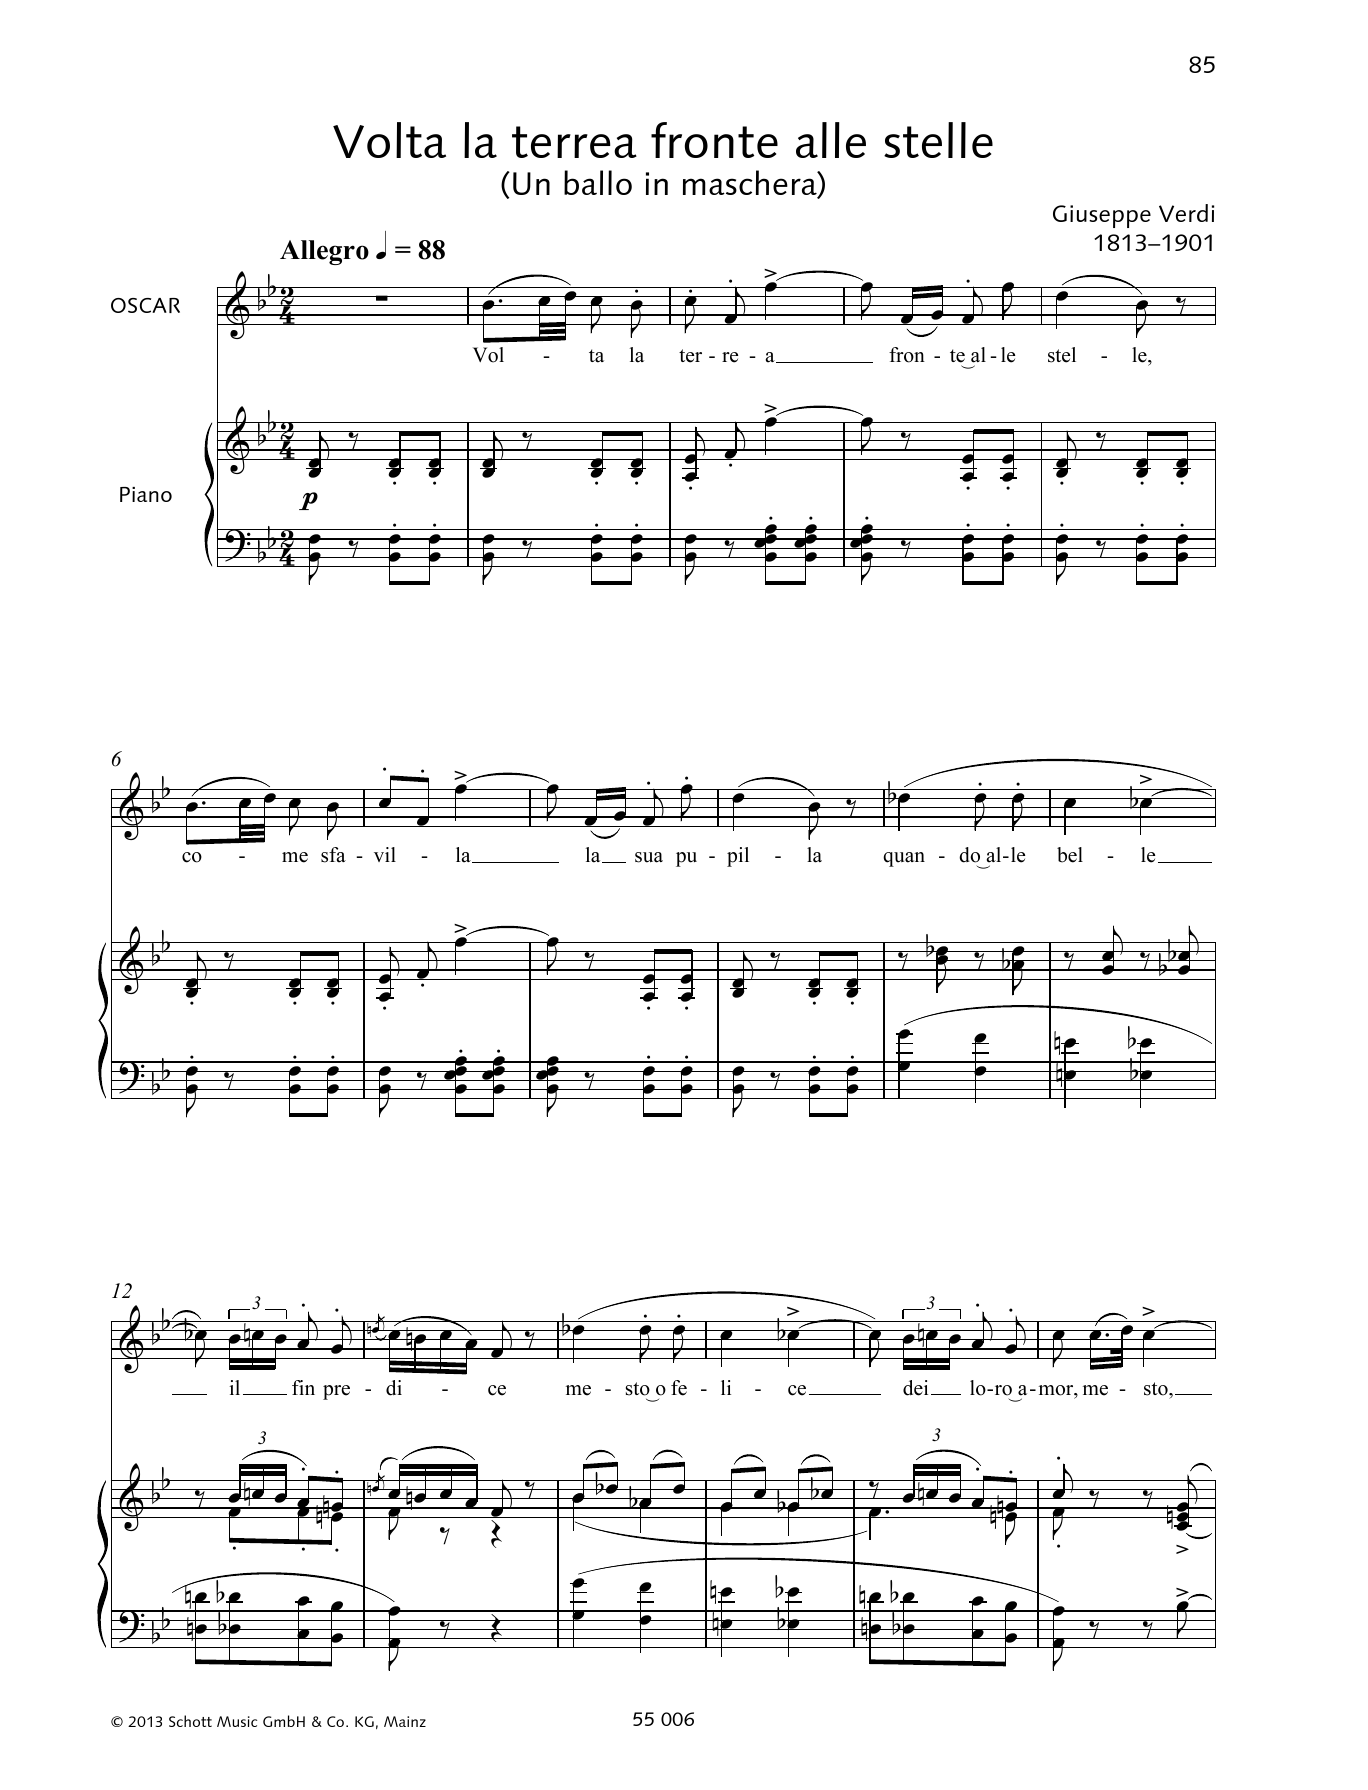 Download Giuseppe Verdi Volta la terrea fronte alle stelle Sheet Music